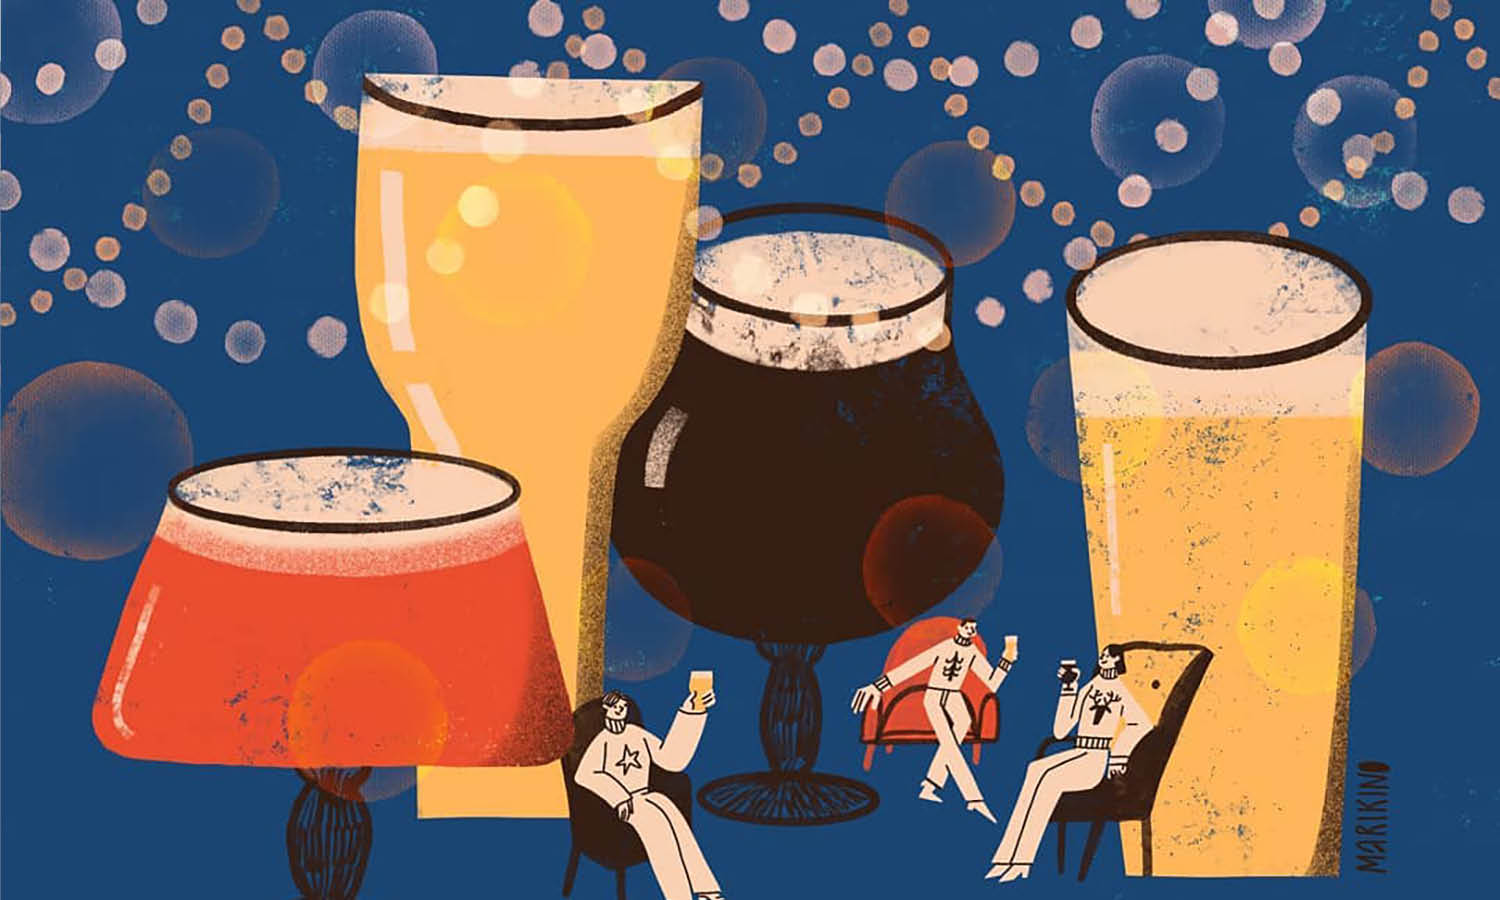 30 Best Beer Illustration Ideas You Should Check